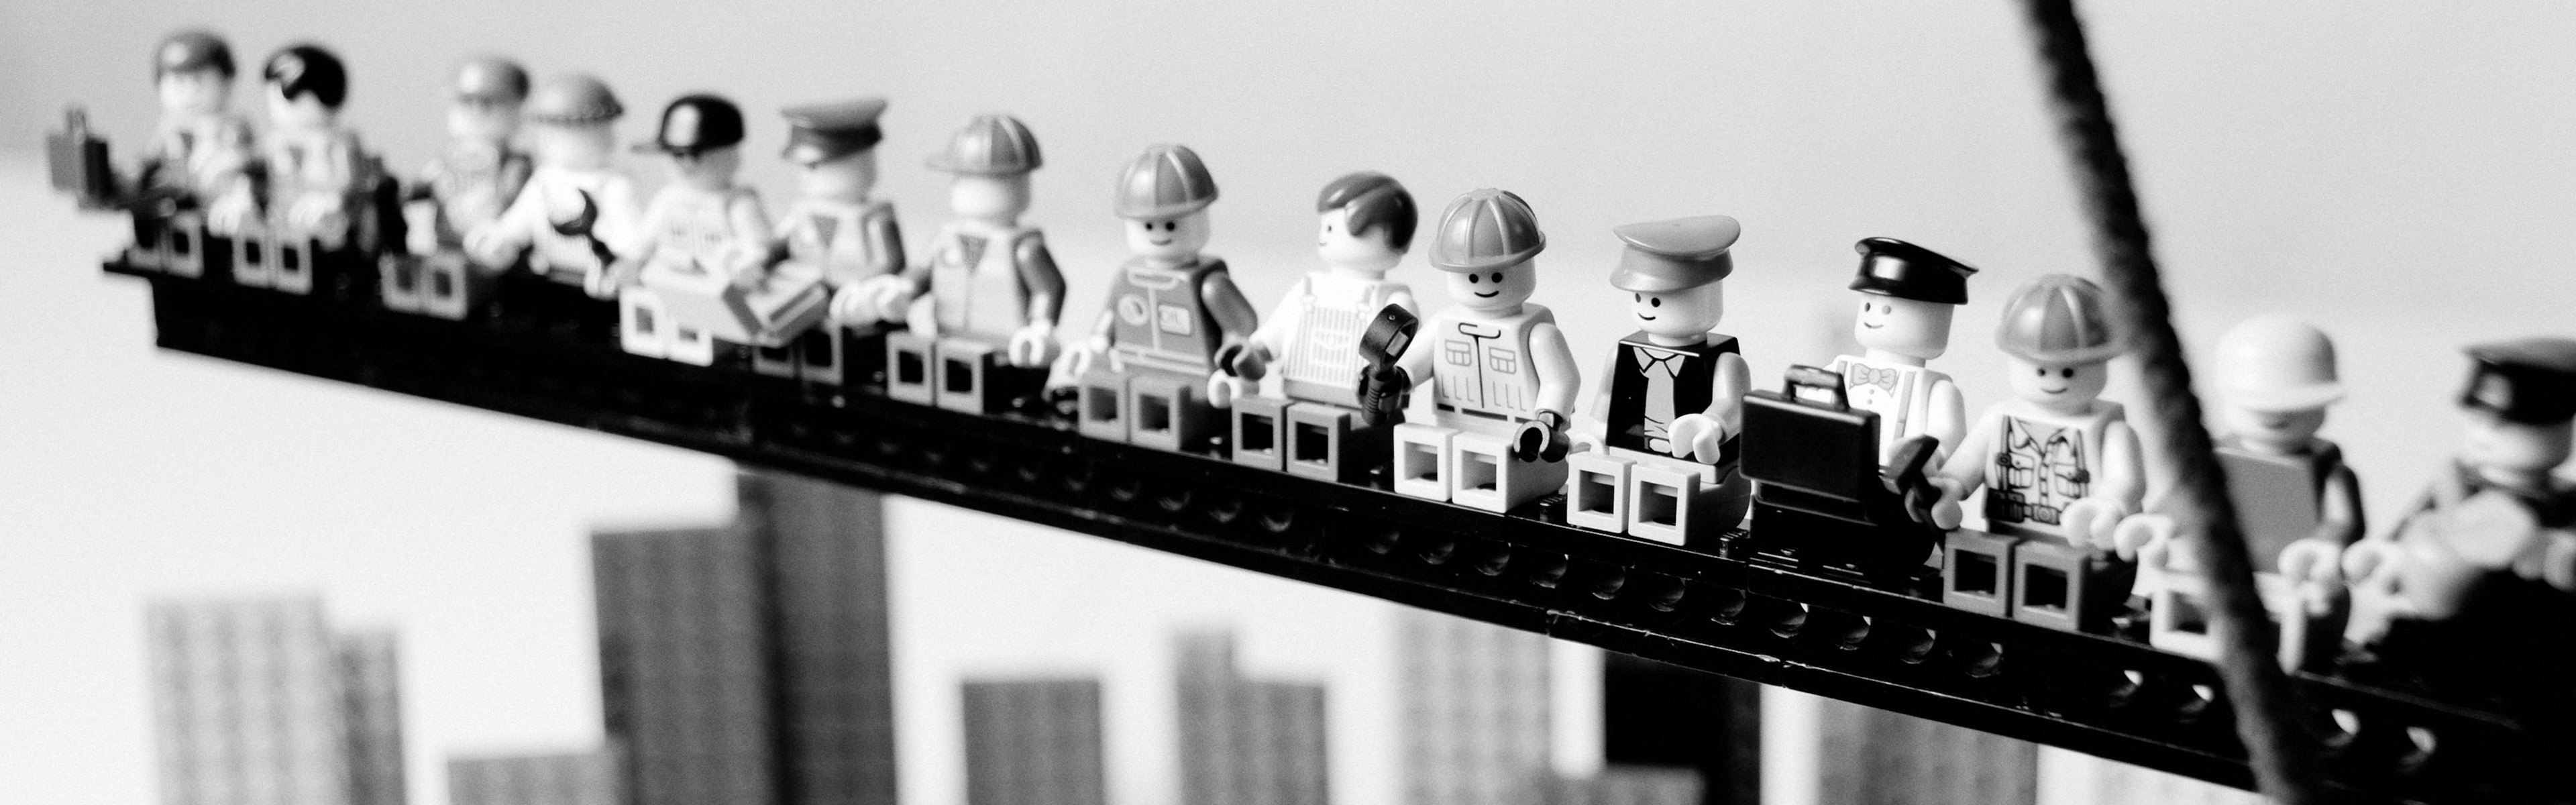 industrial plants, Legos - desktop wallpaper